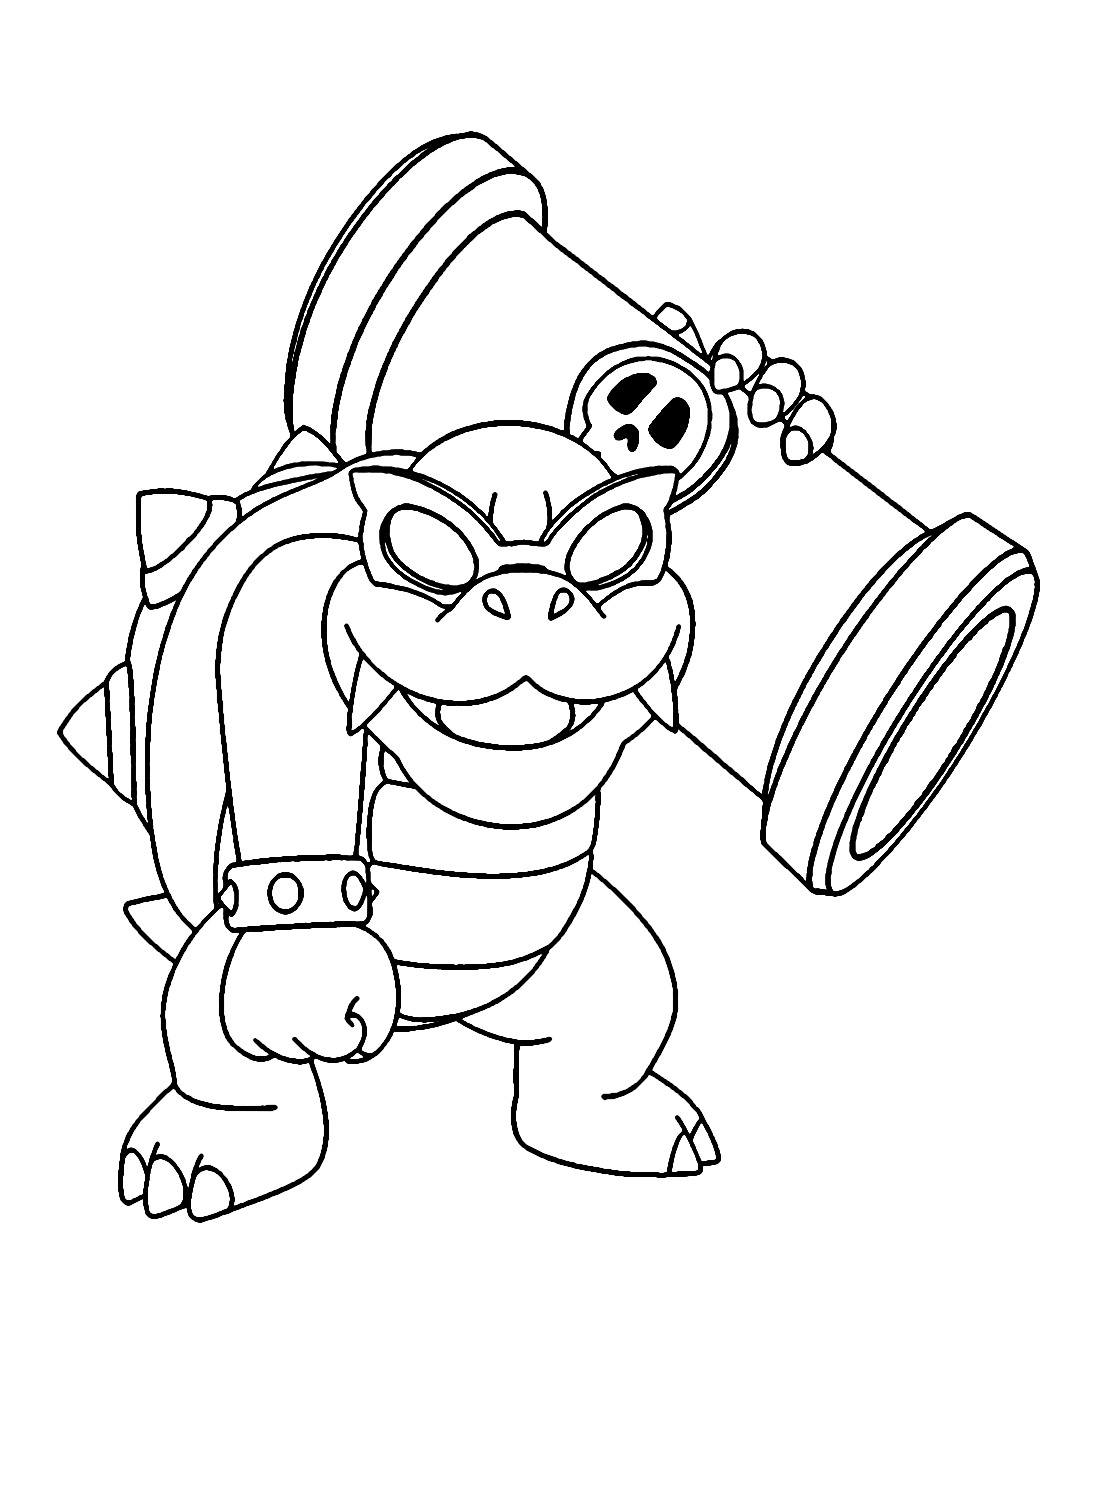 Roy Koopa aus Super Mario von Koopalings